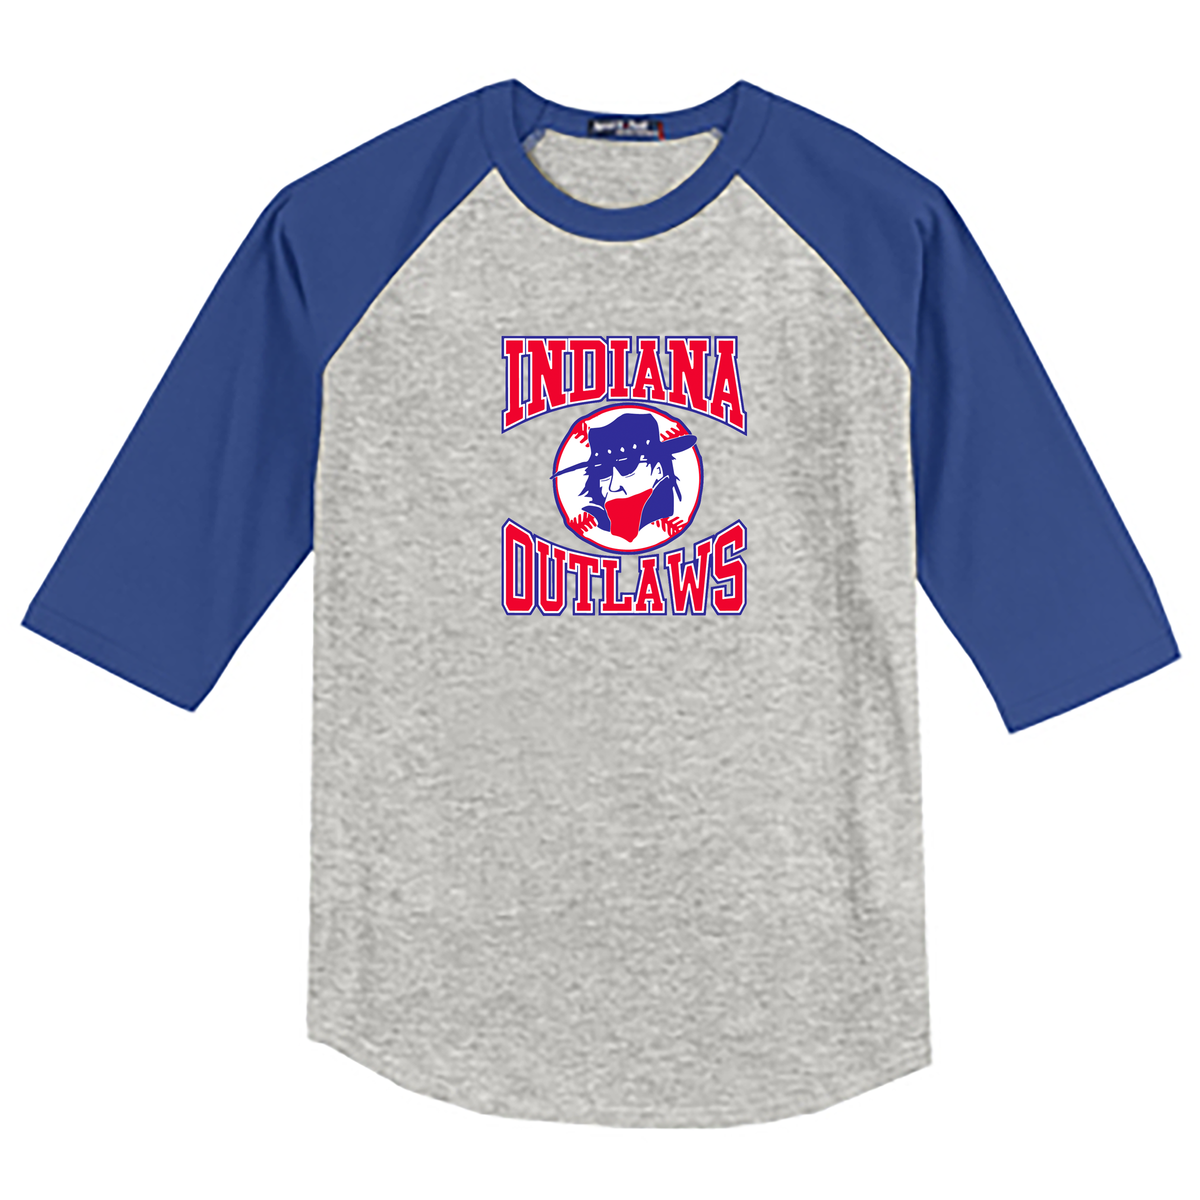 Southern Indiana Outlaws Baseball 3/4 Sleeve Baseball Shirt